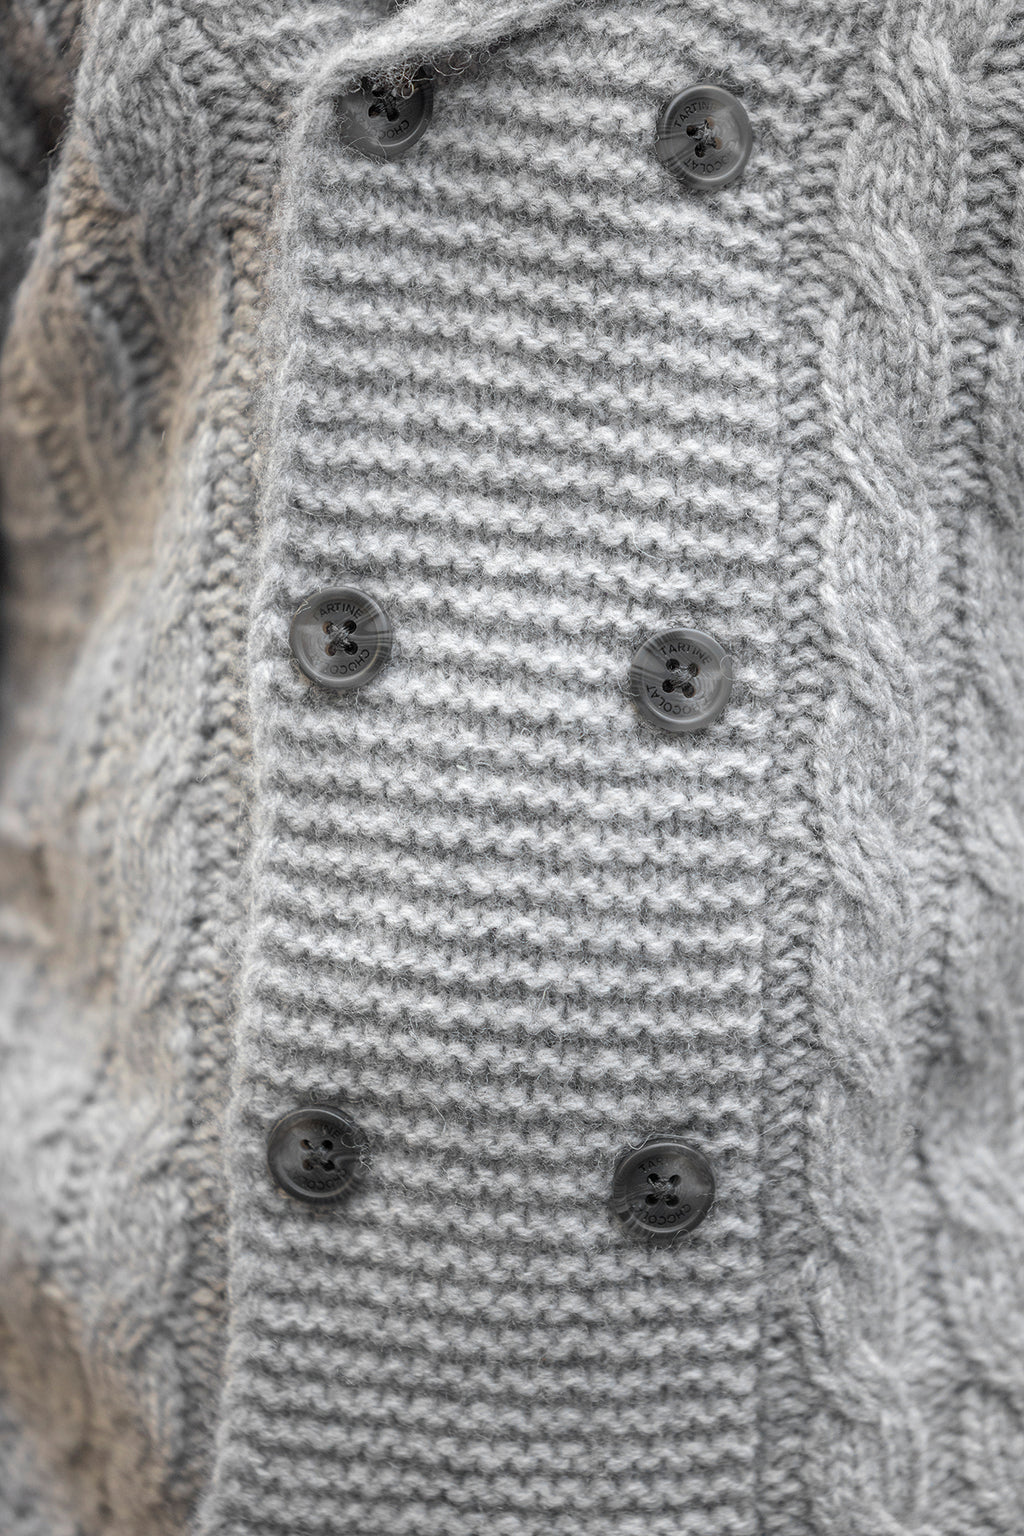 Cardigan - Grey Shawl collar Wool